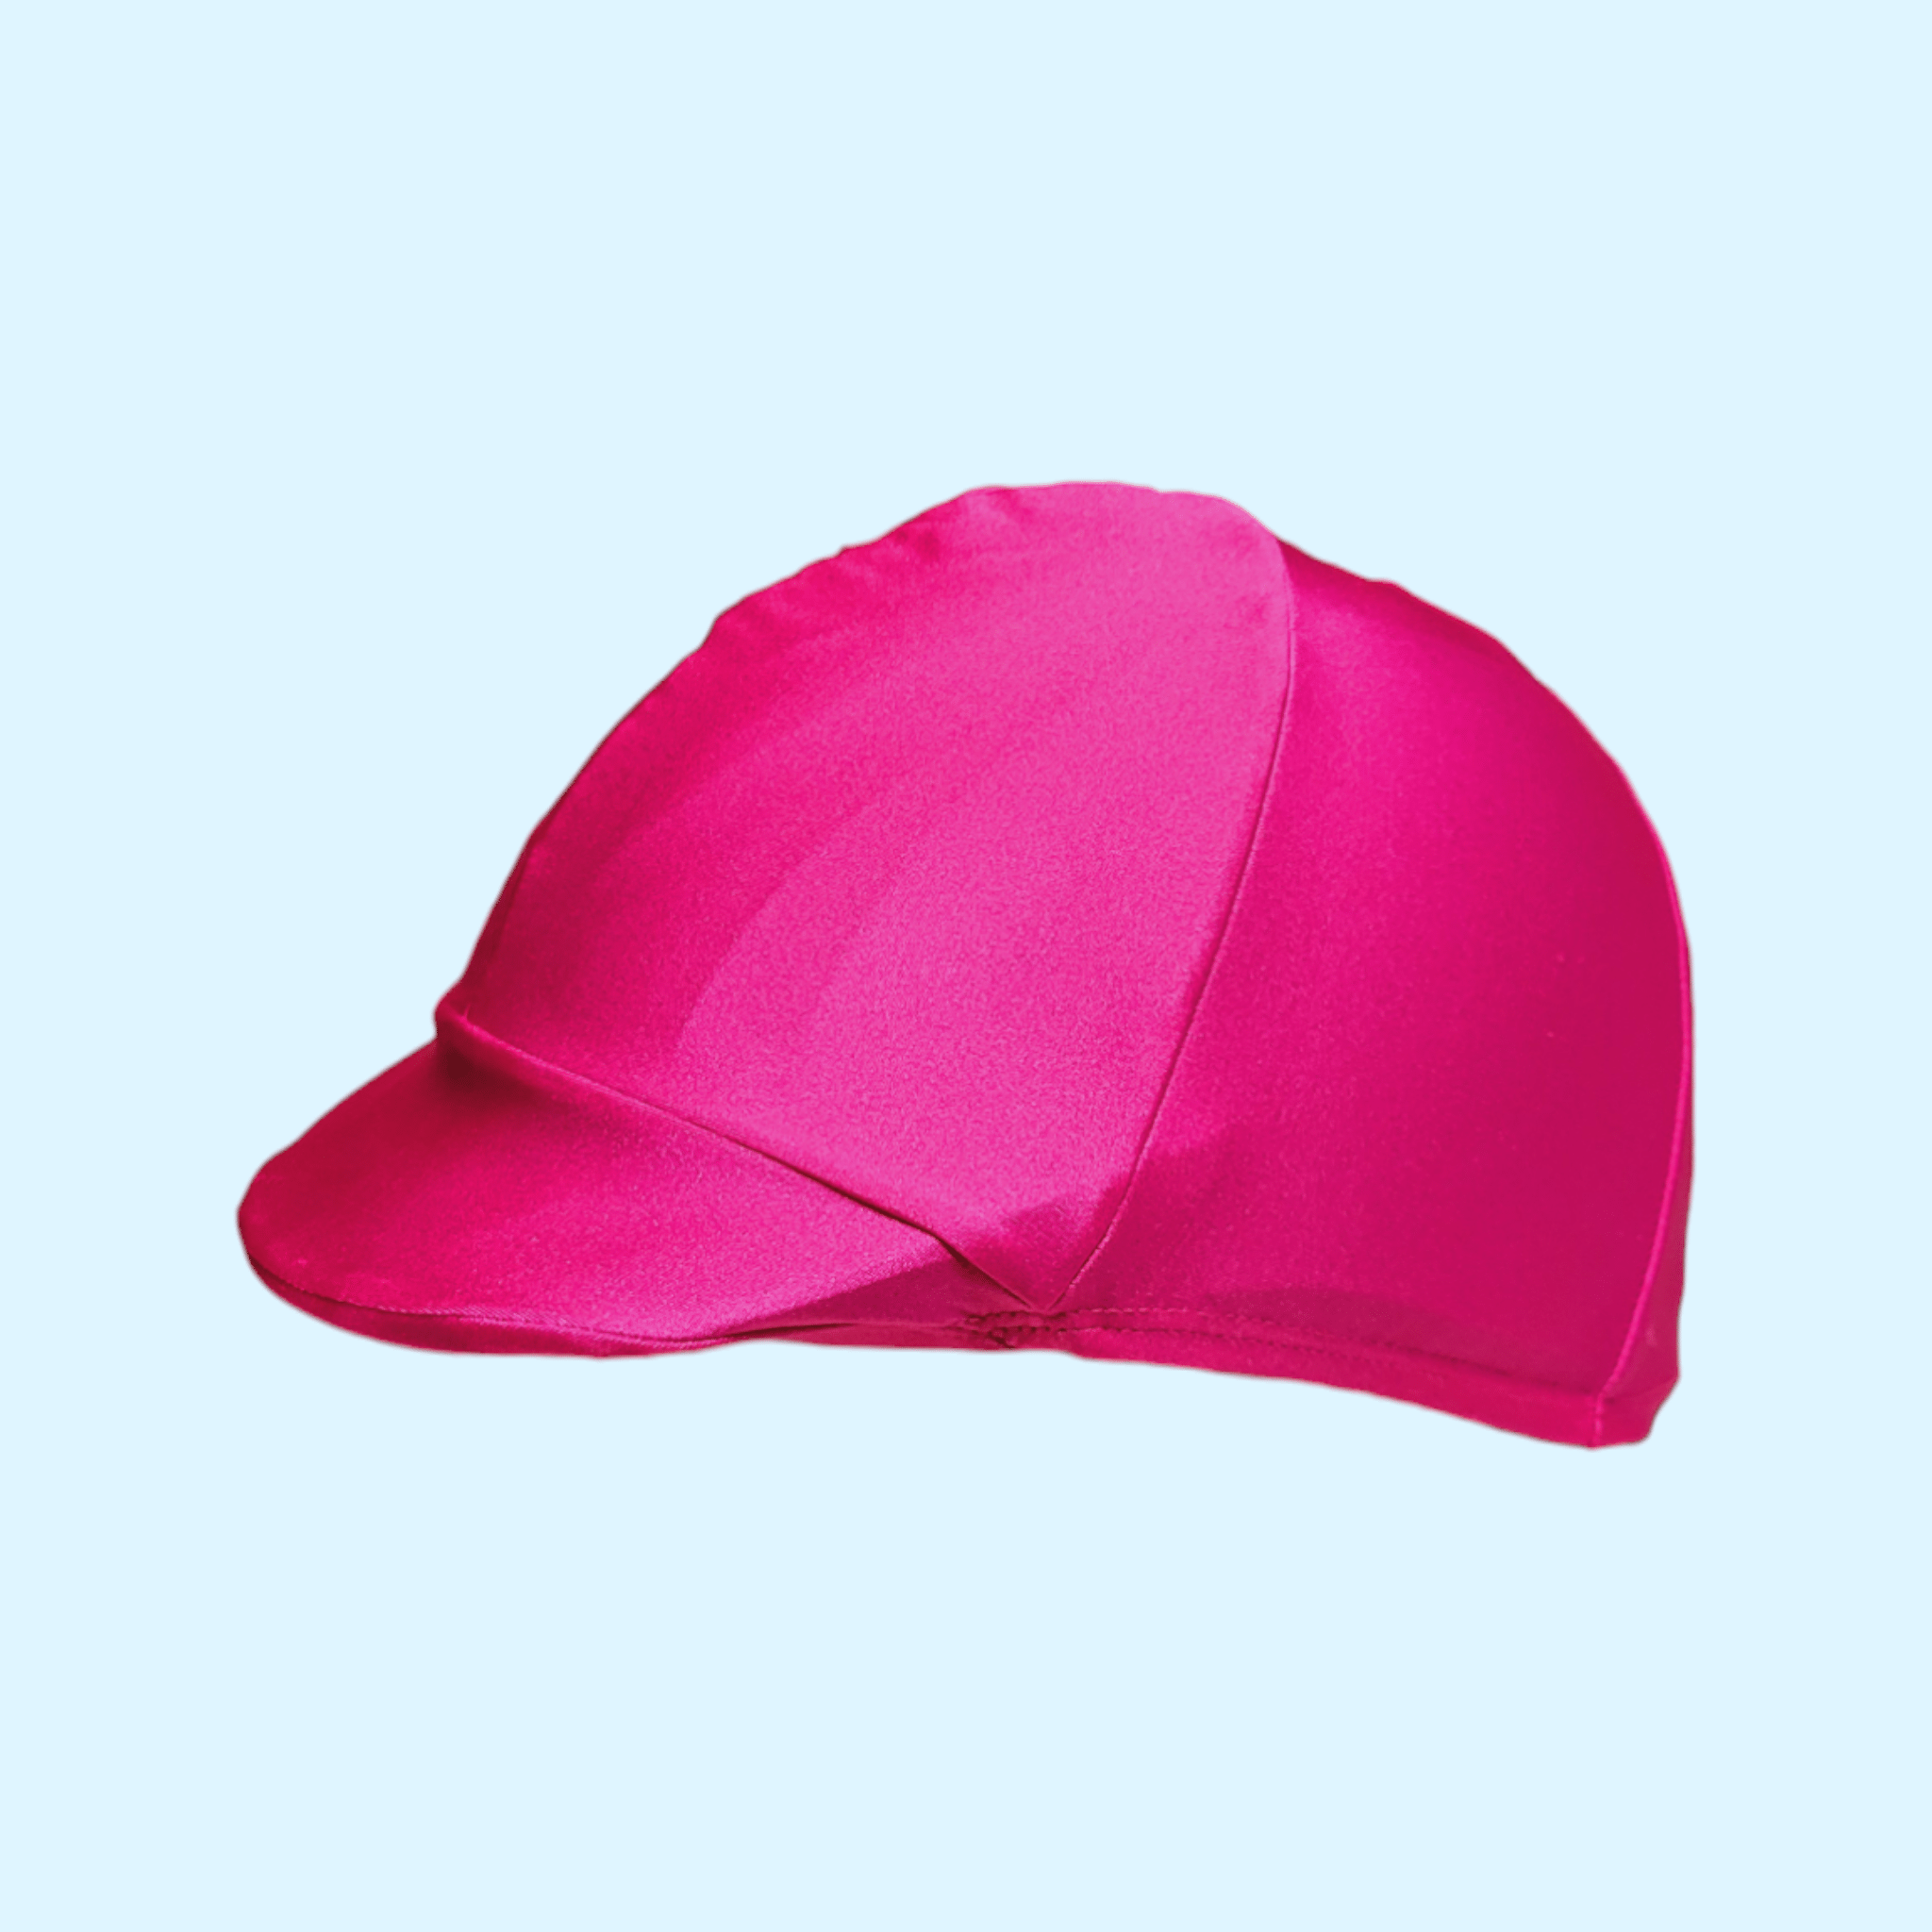 Ovation Lycra Helmet Cover in Hot Pink